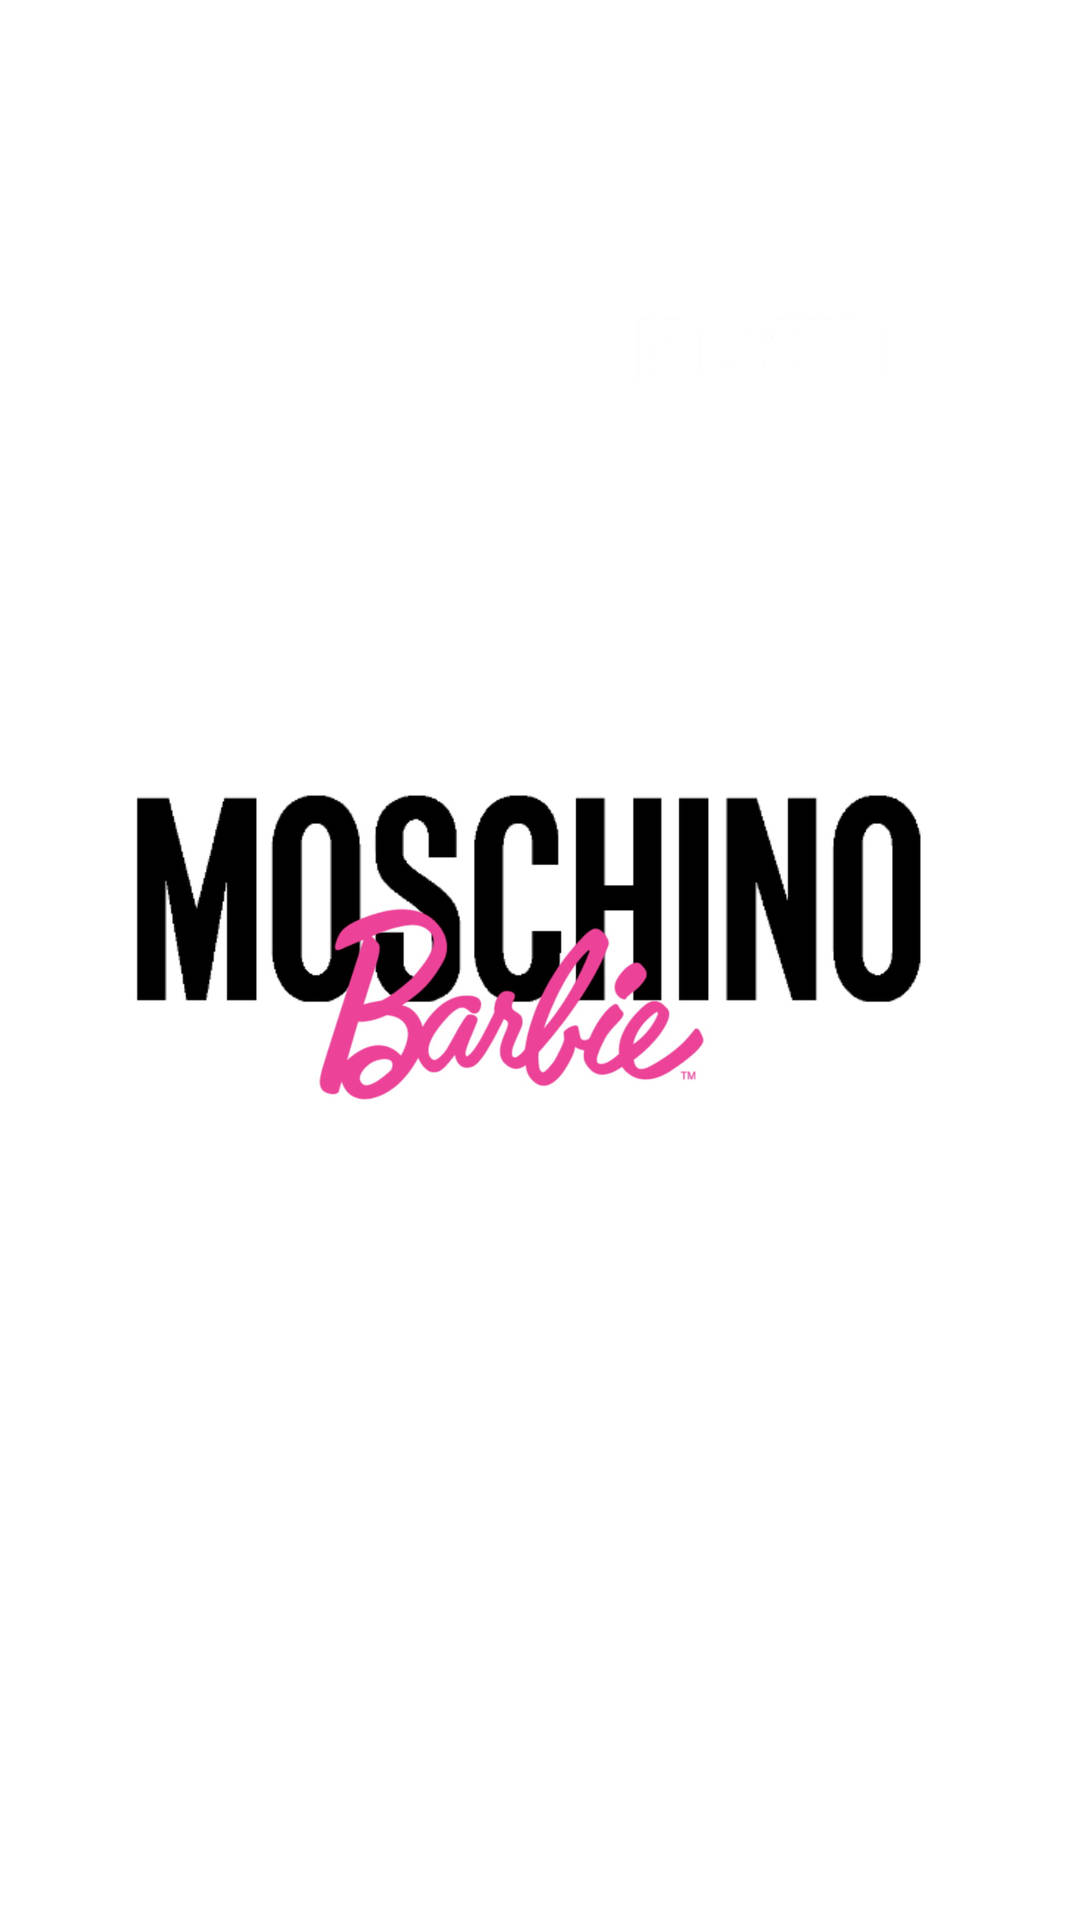 Moschino Barbie Wallpaper